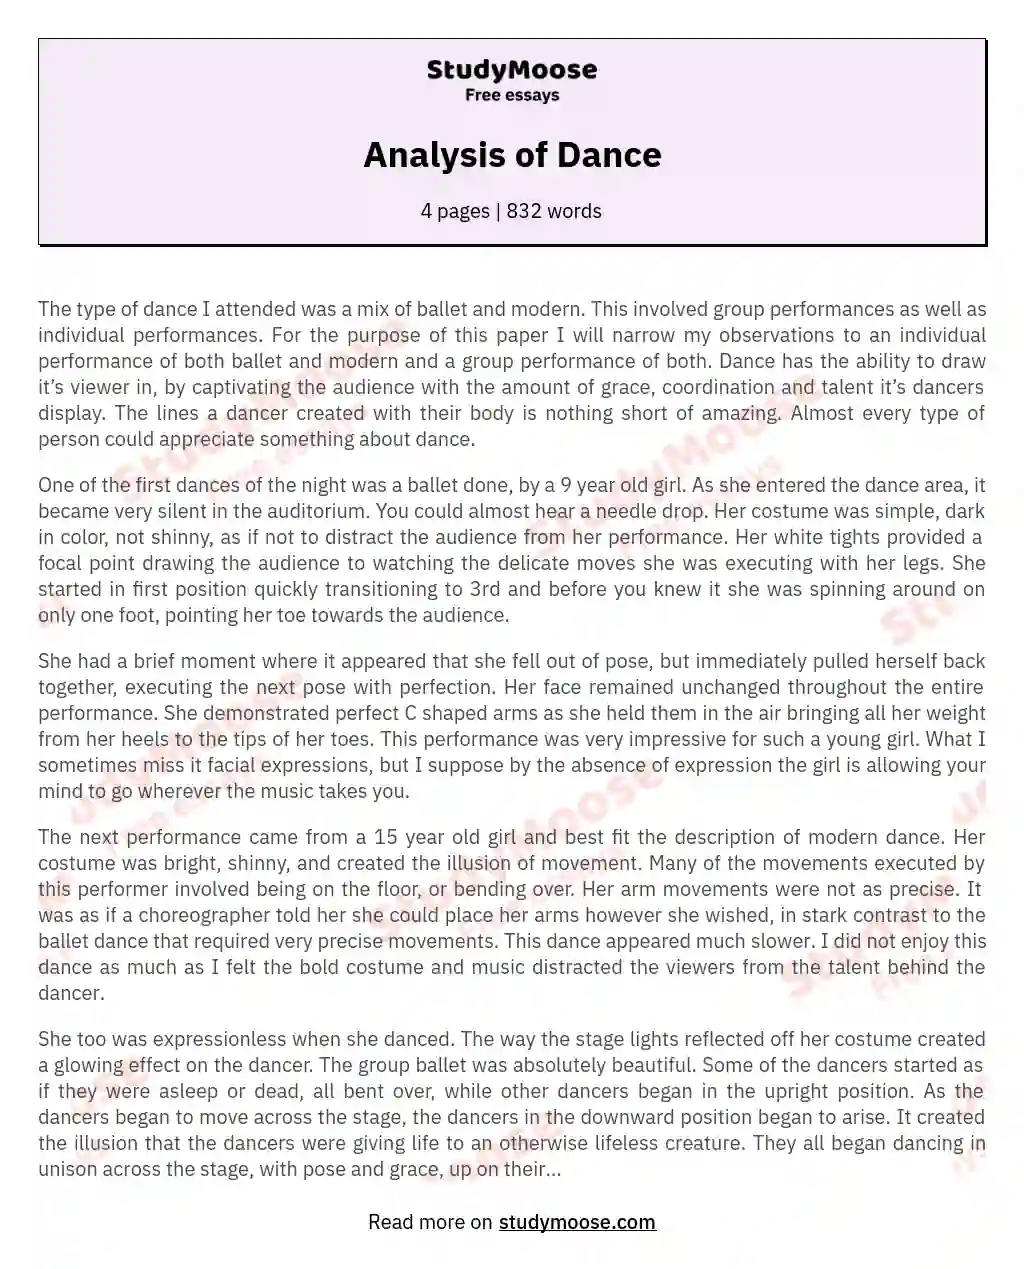 Analysis of Dance essay